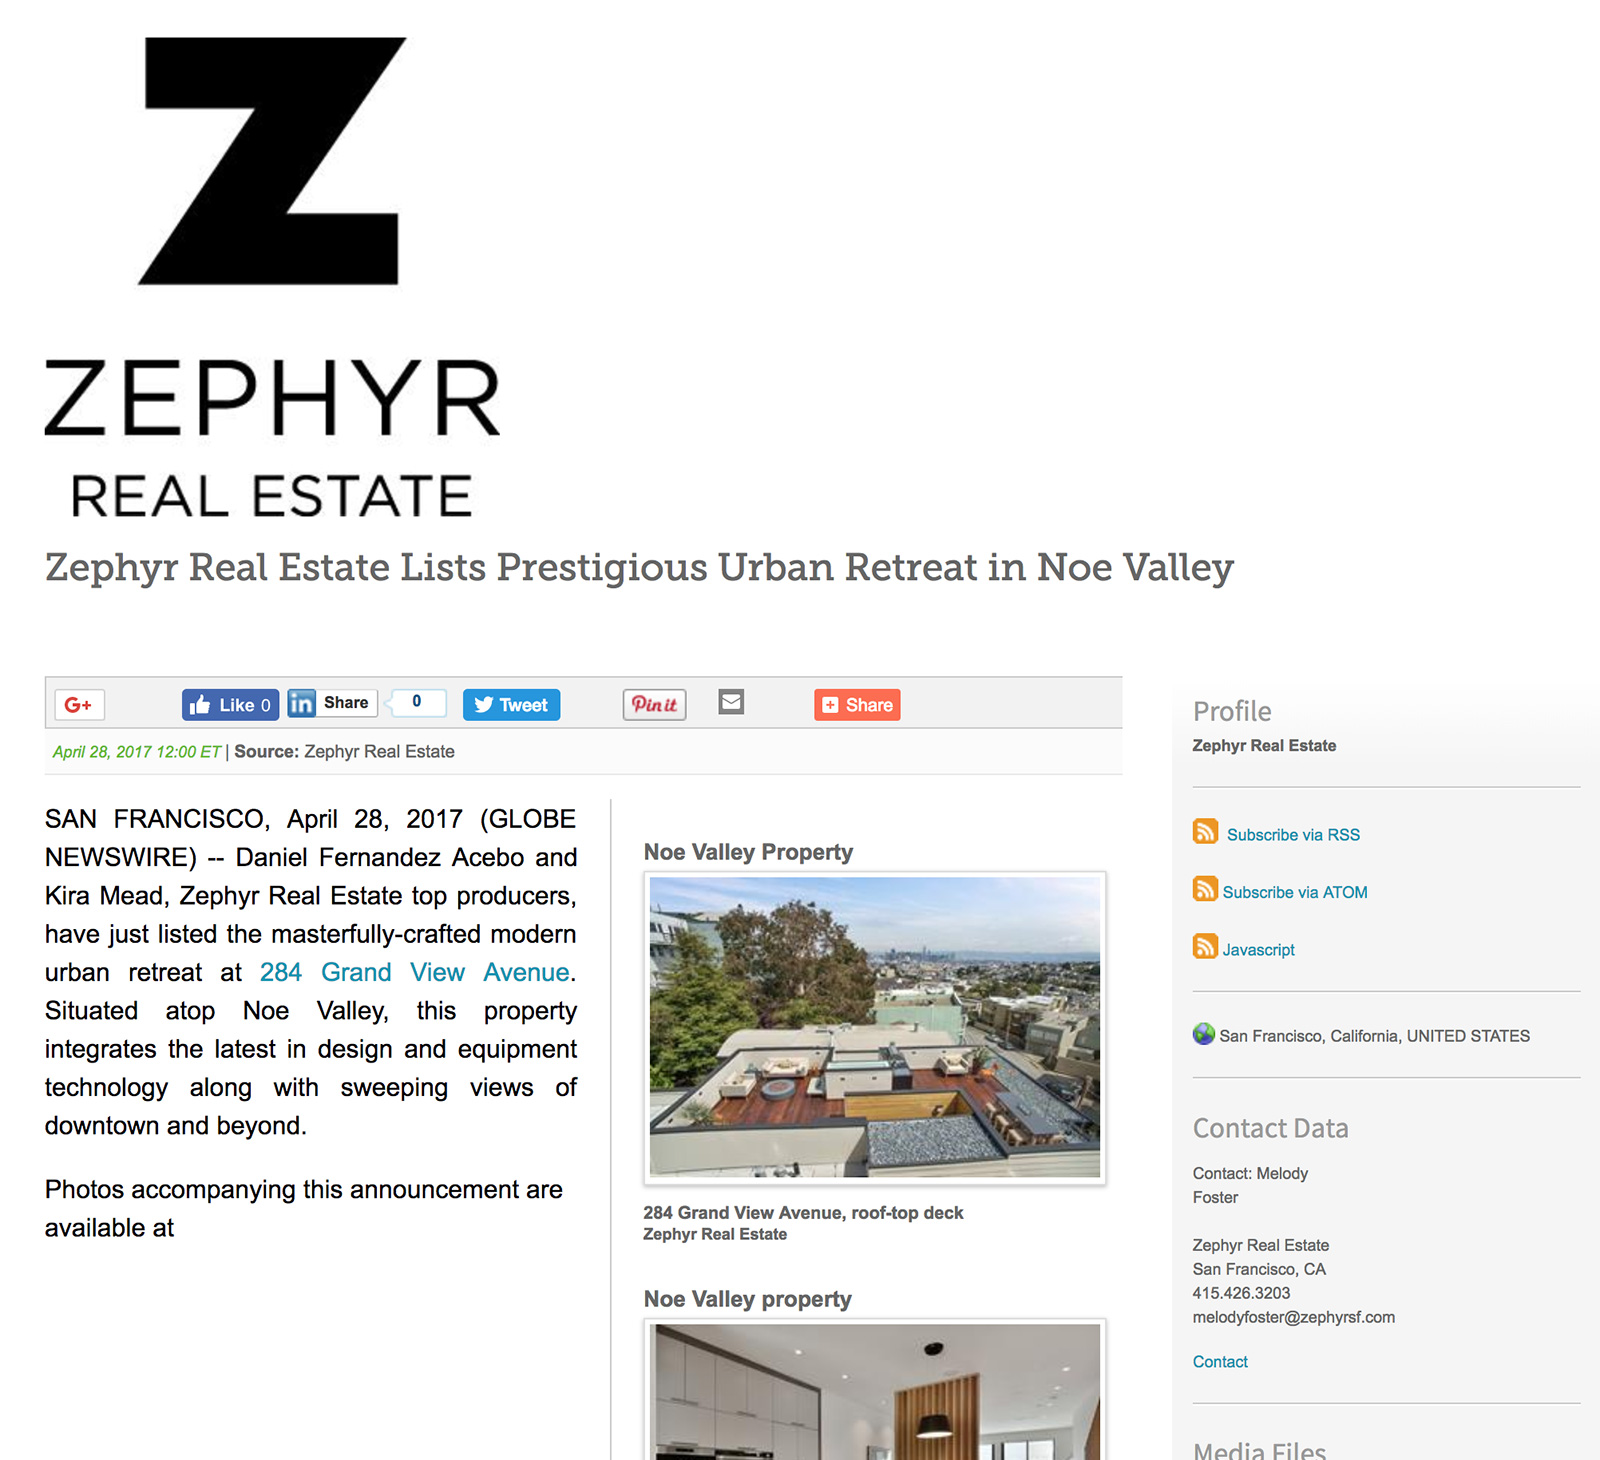 Zephyr Real Estate Lists Prestigious Urban Retreat in Noe Valley